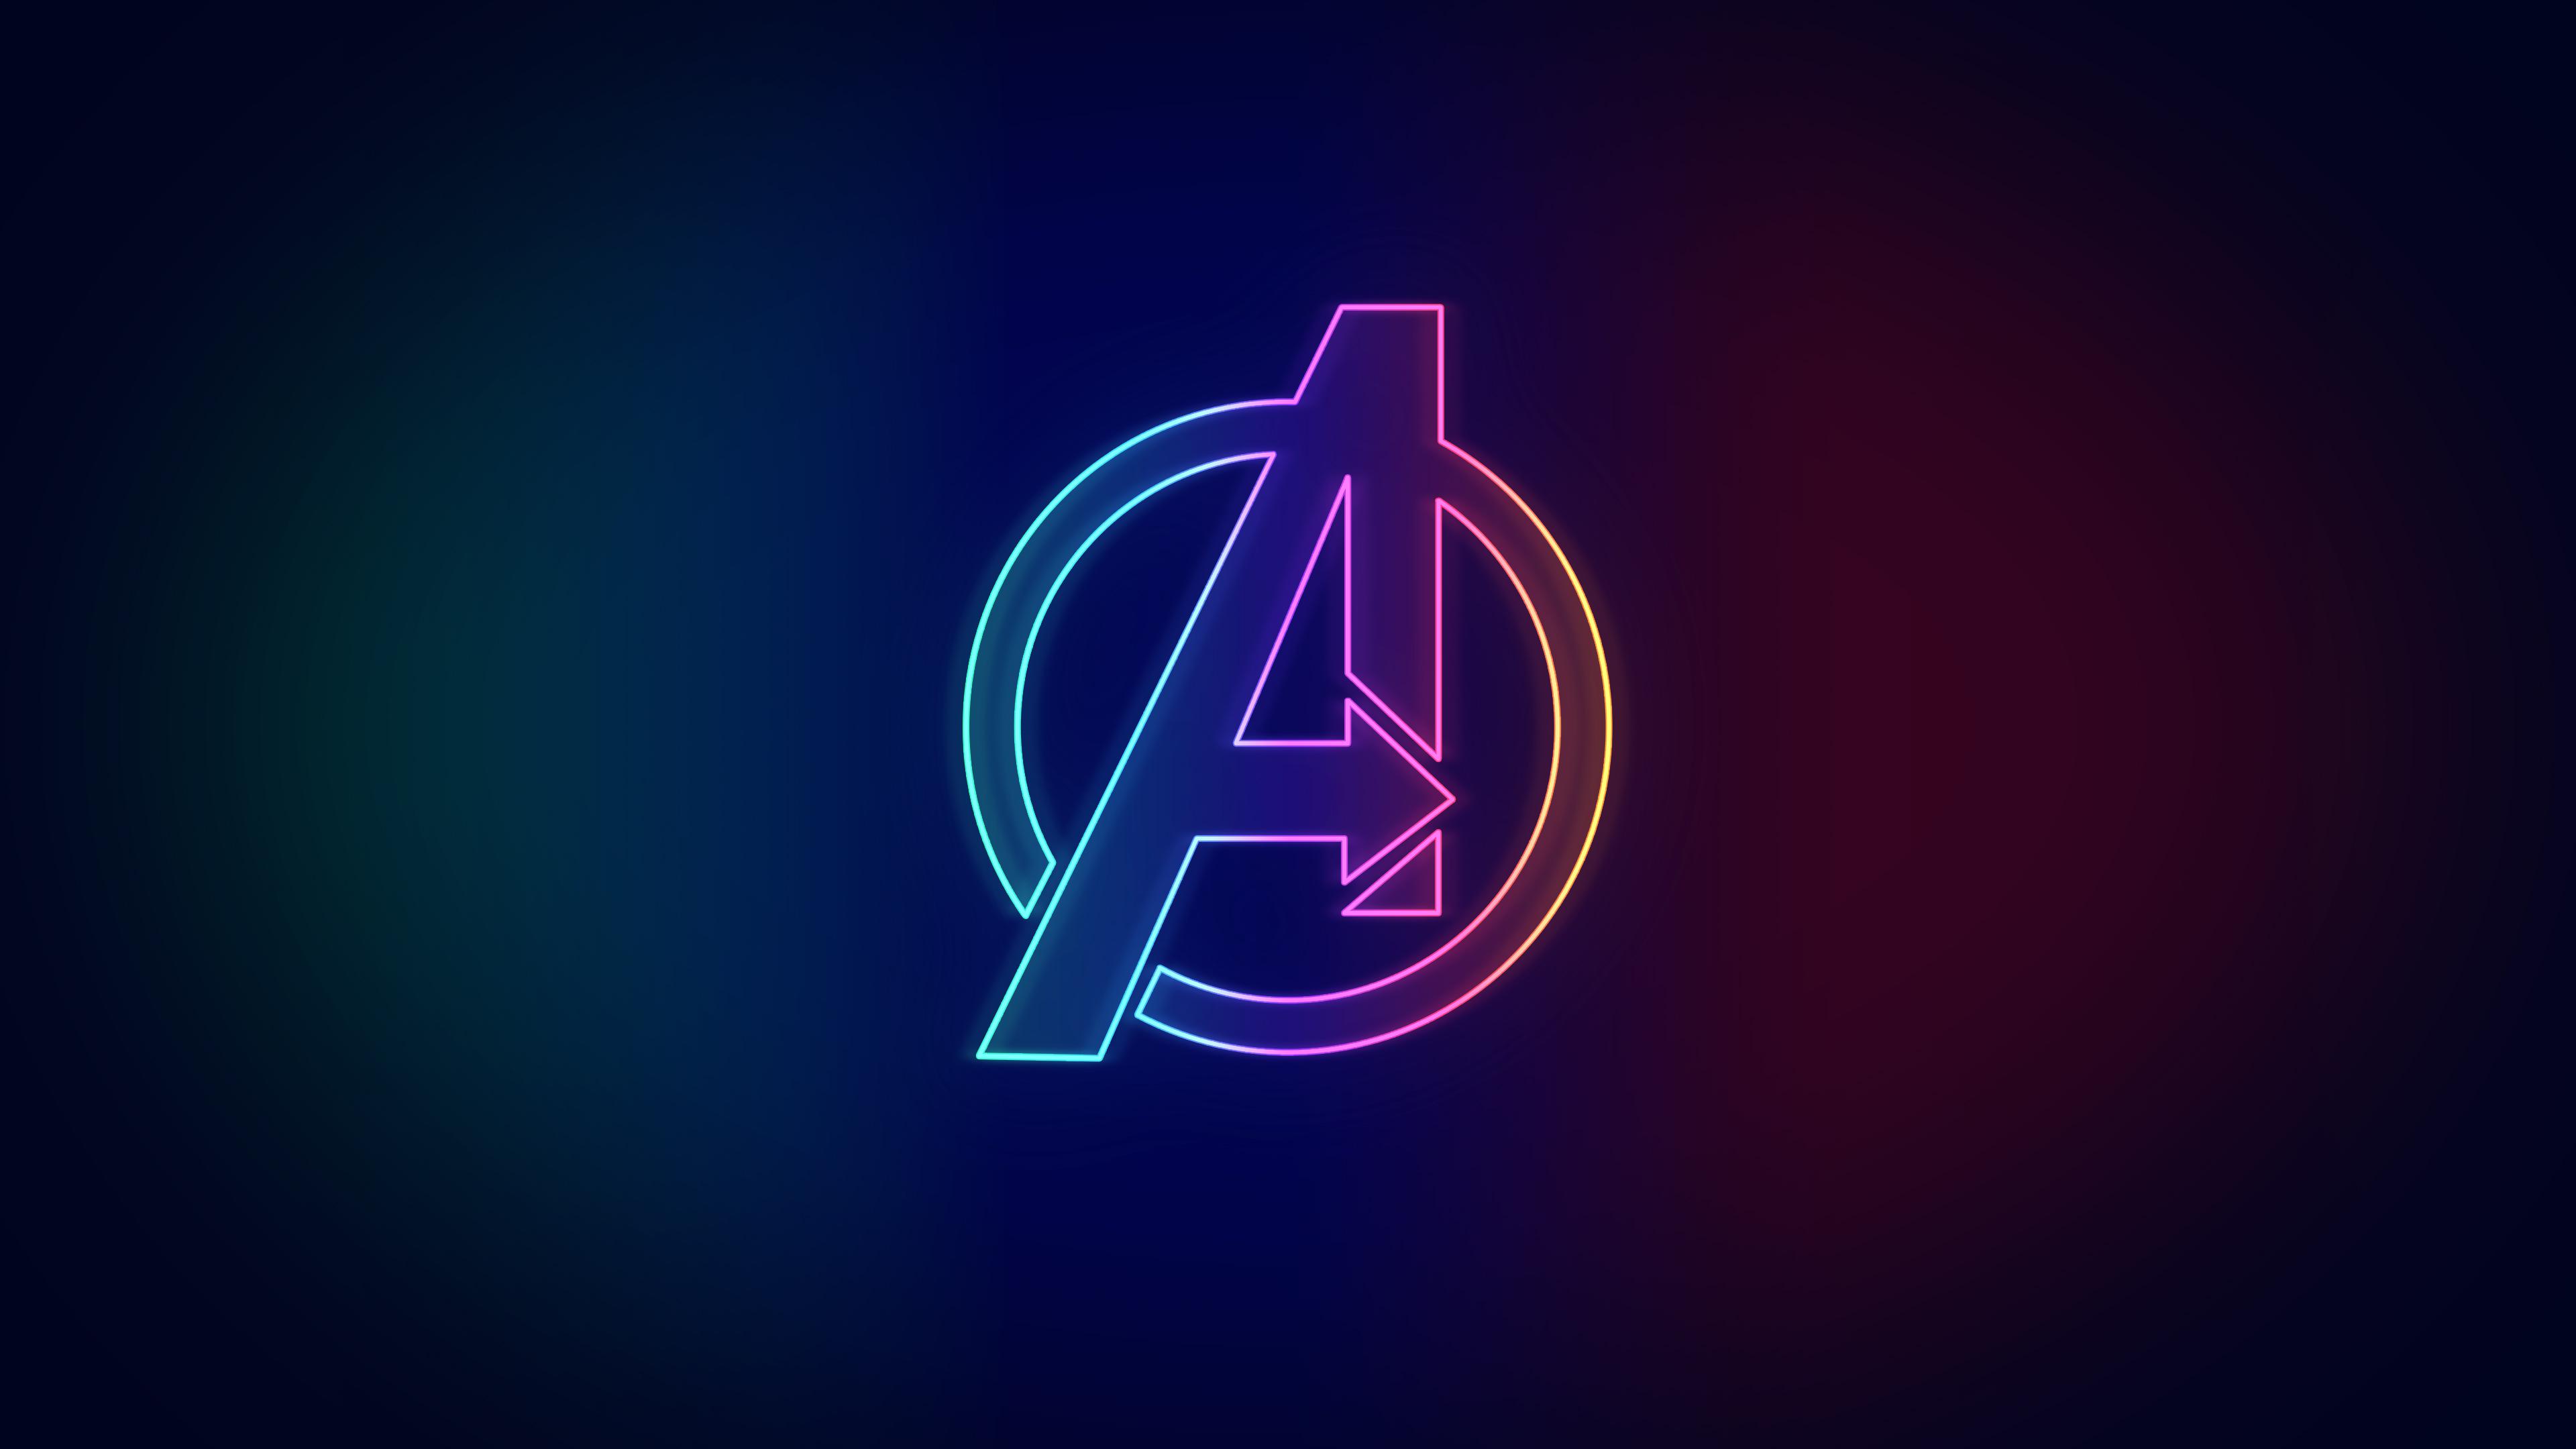 Neon Avengers Wallpapers